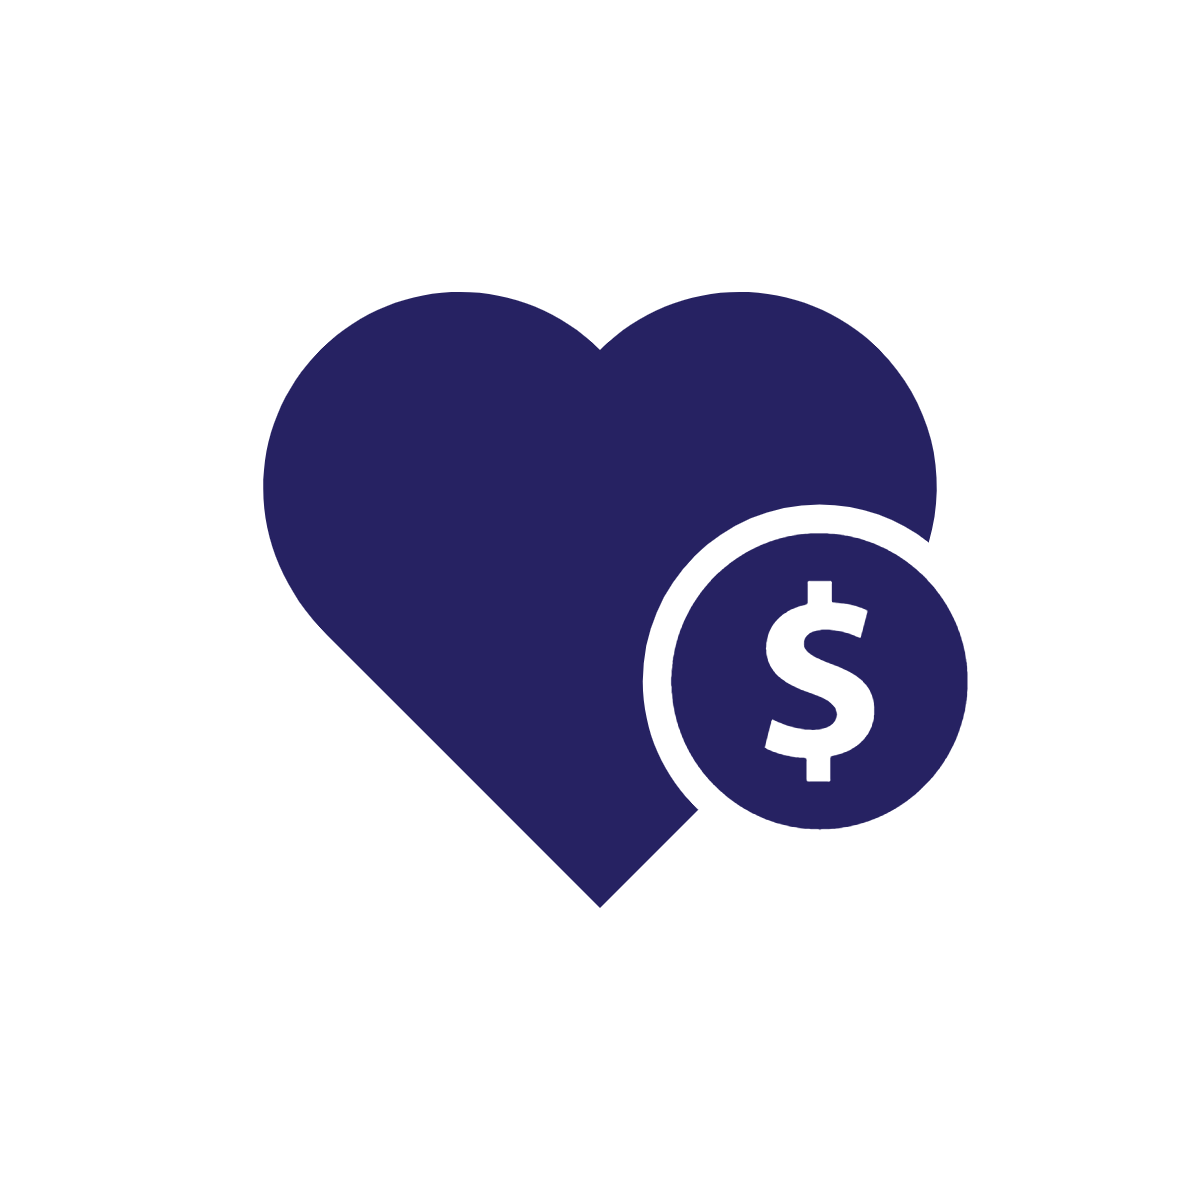 heart with money symbol